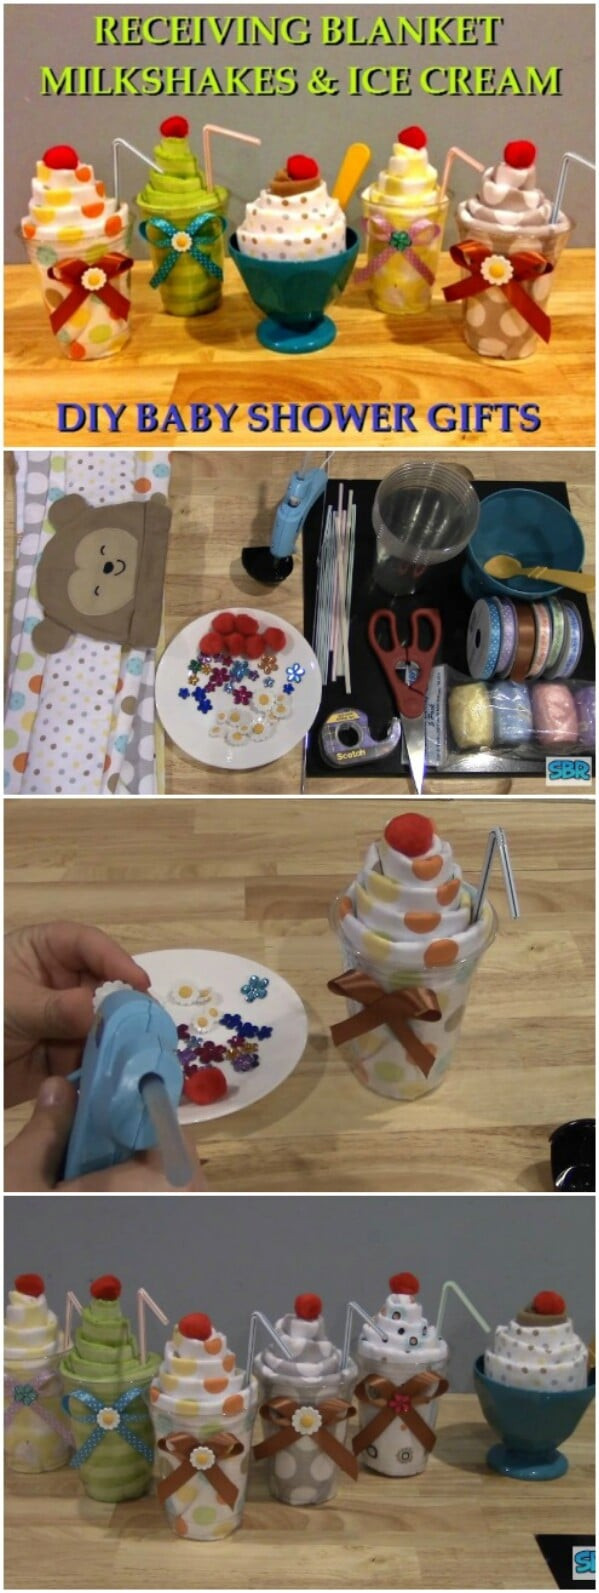 Crafty Baby Shower Gift Ideas
 25 Enchantingly Adorable Baby Shower Gift Ideas That Will